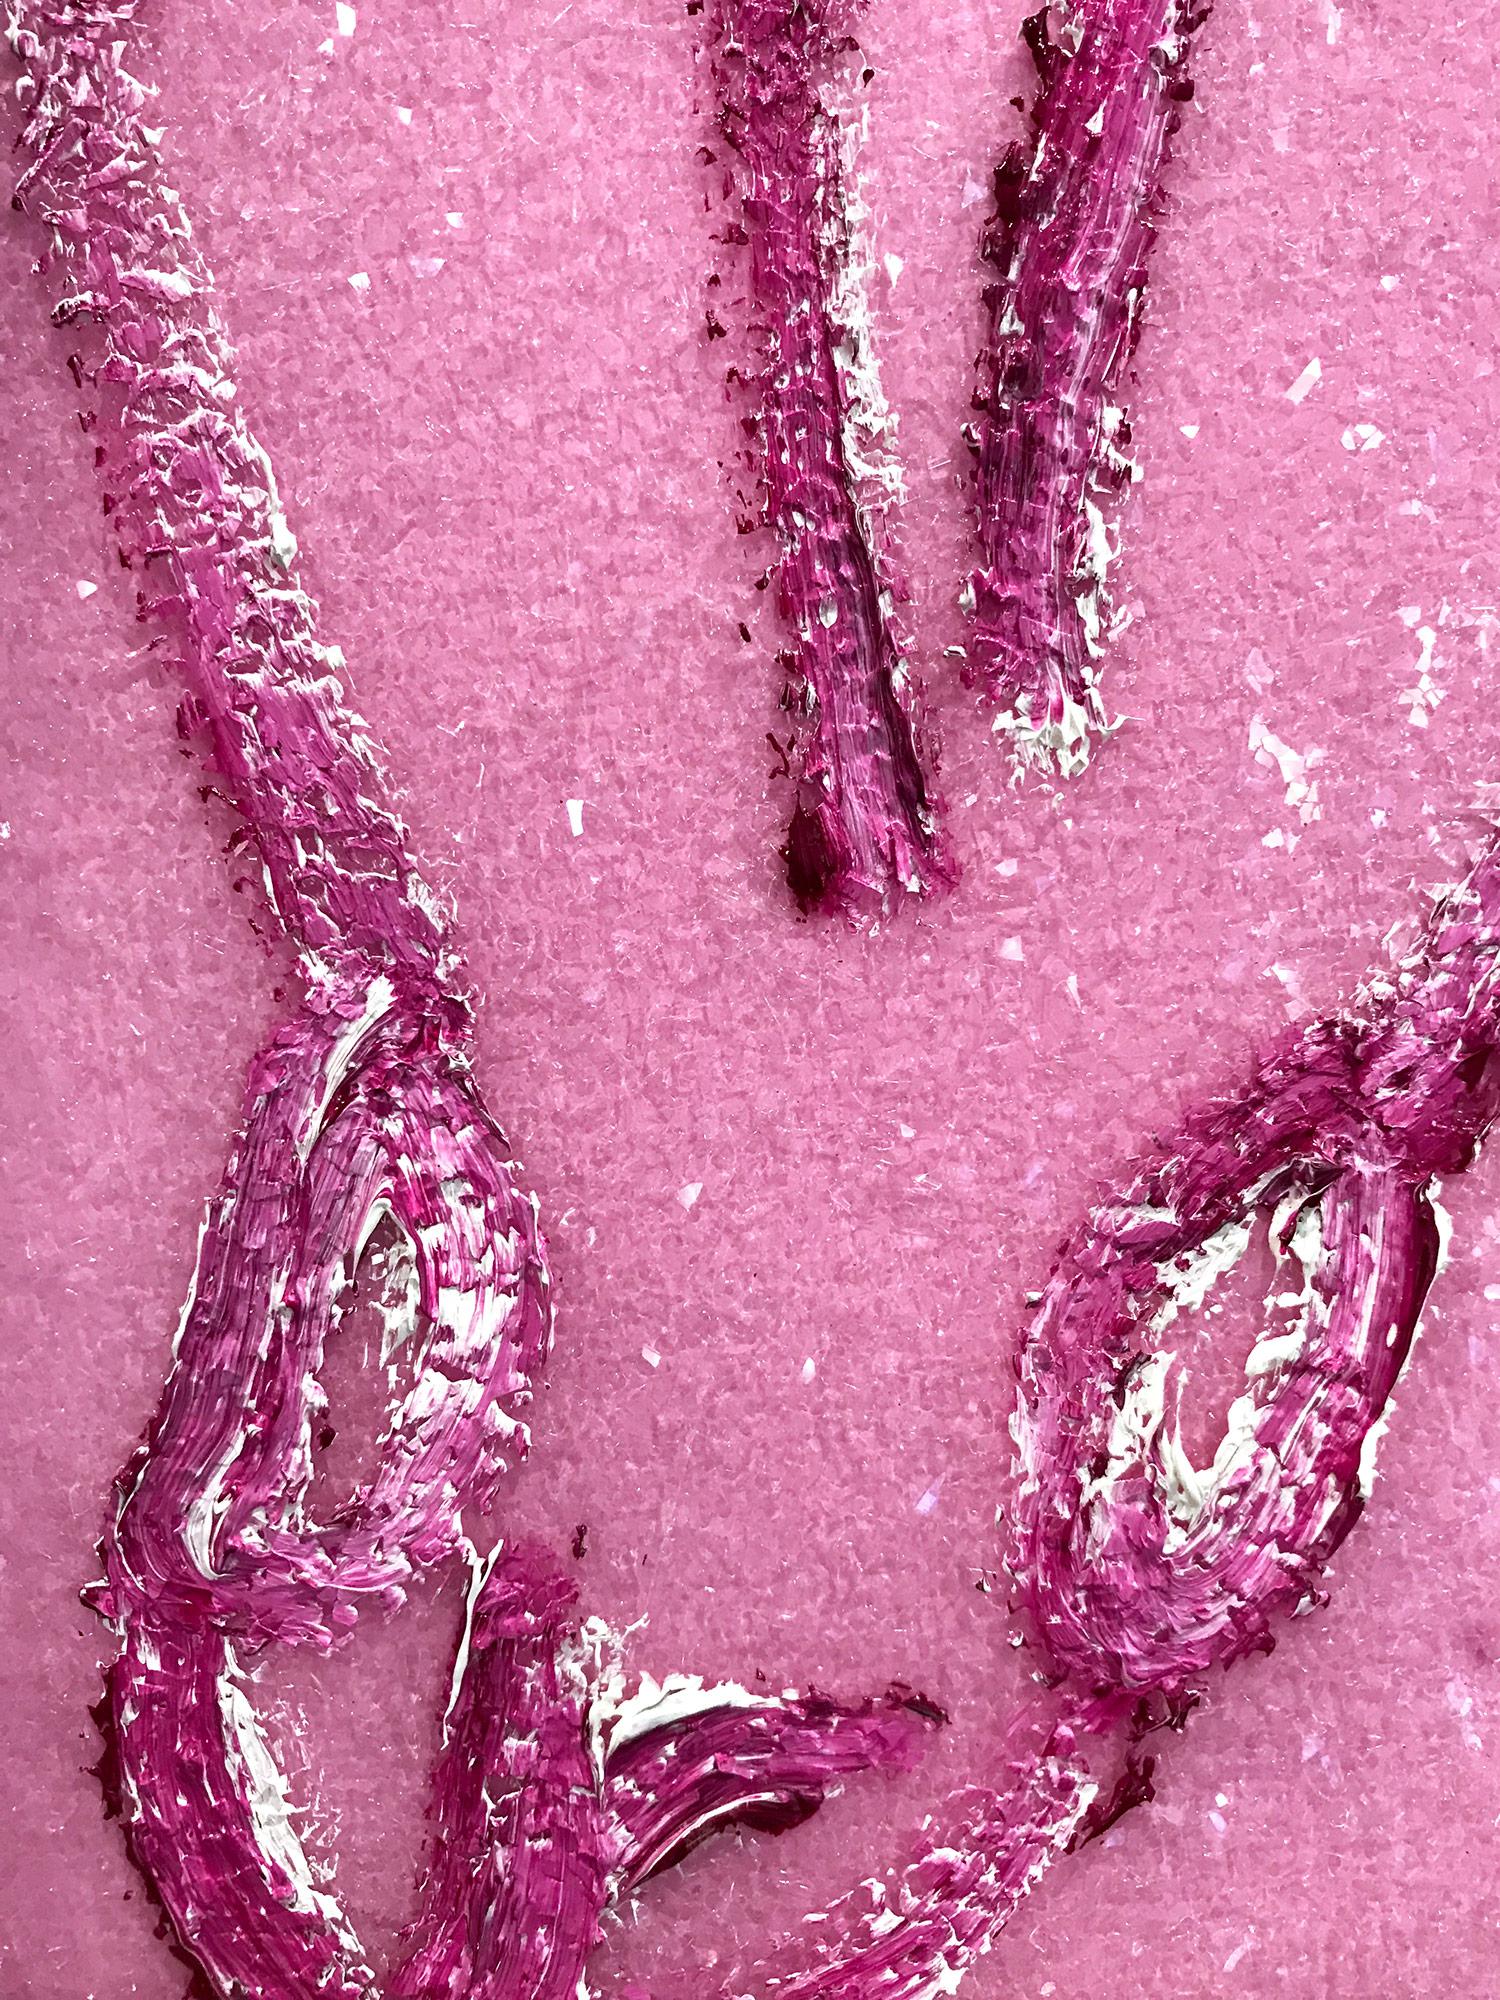 Untitled (Bunny on Pink Diamond Dust) 8